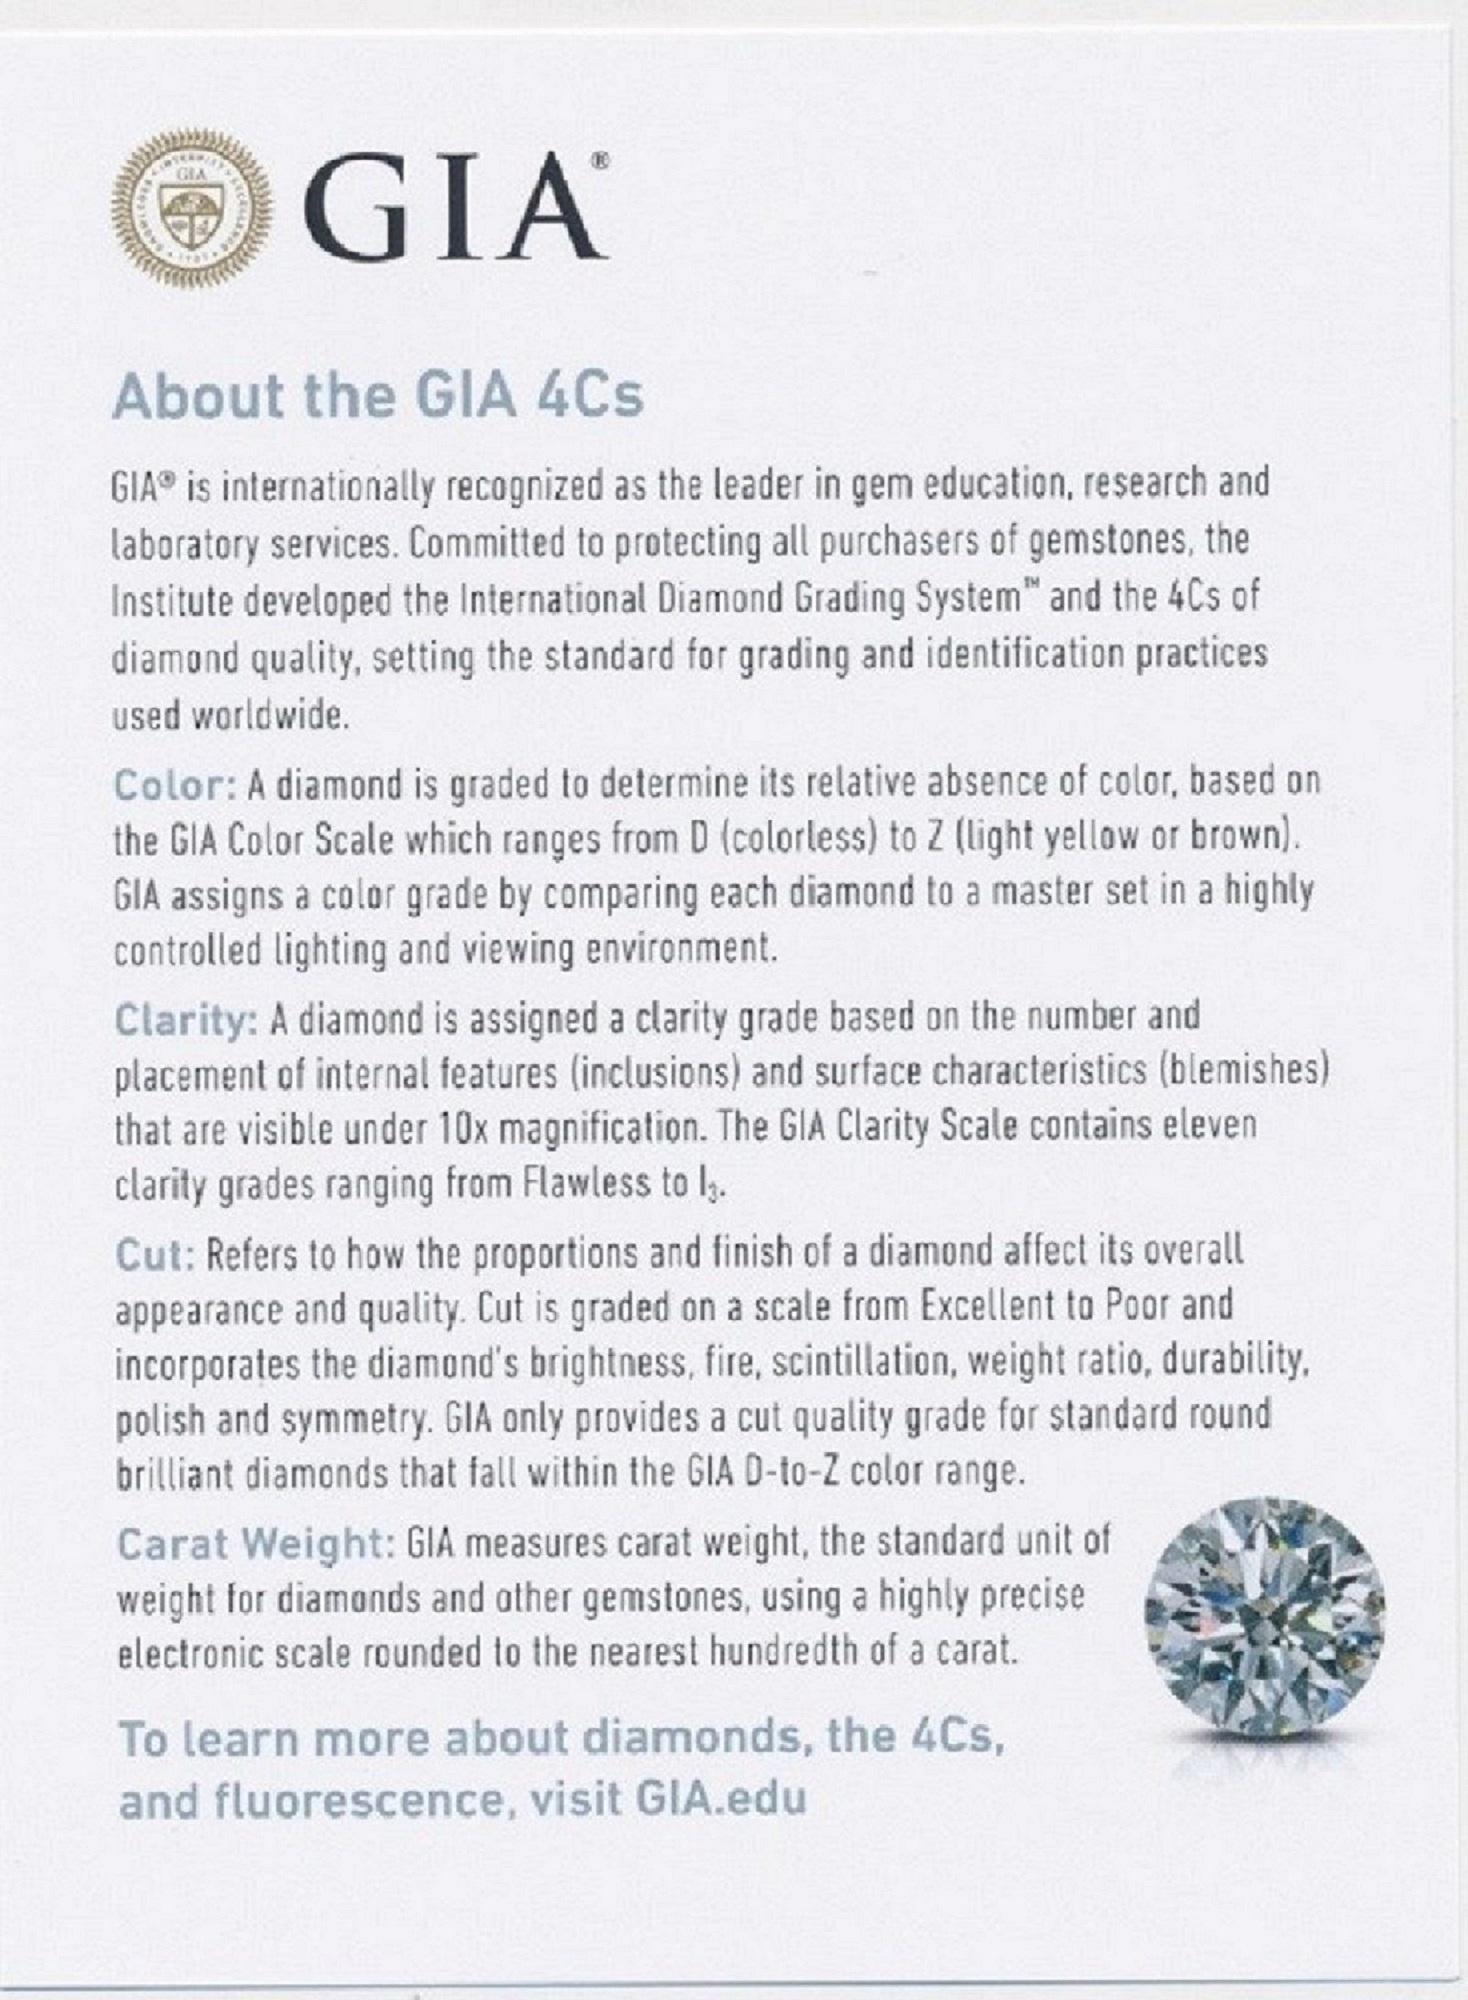 Elegant 18k White Gold Three Stone Ring 0.86ct Natural Diamonds GIA Certificate 6